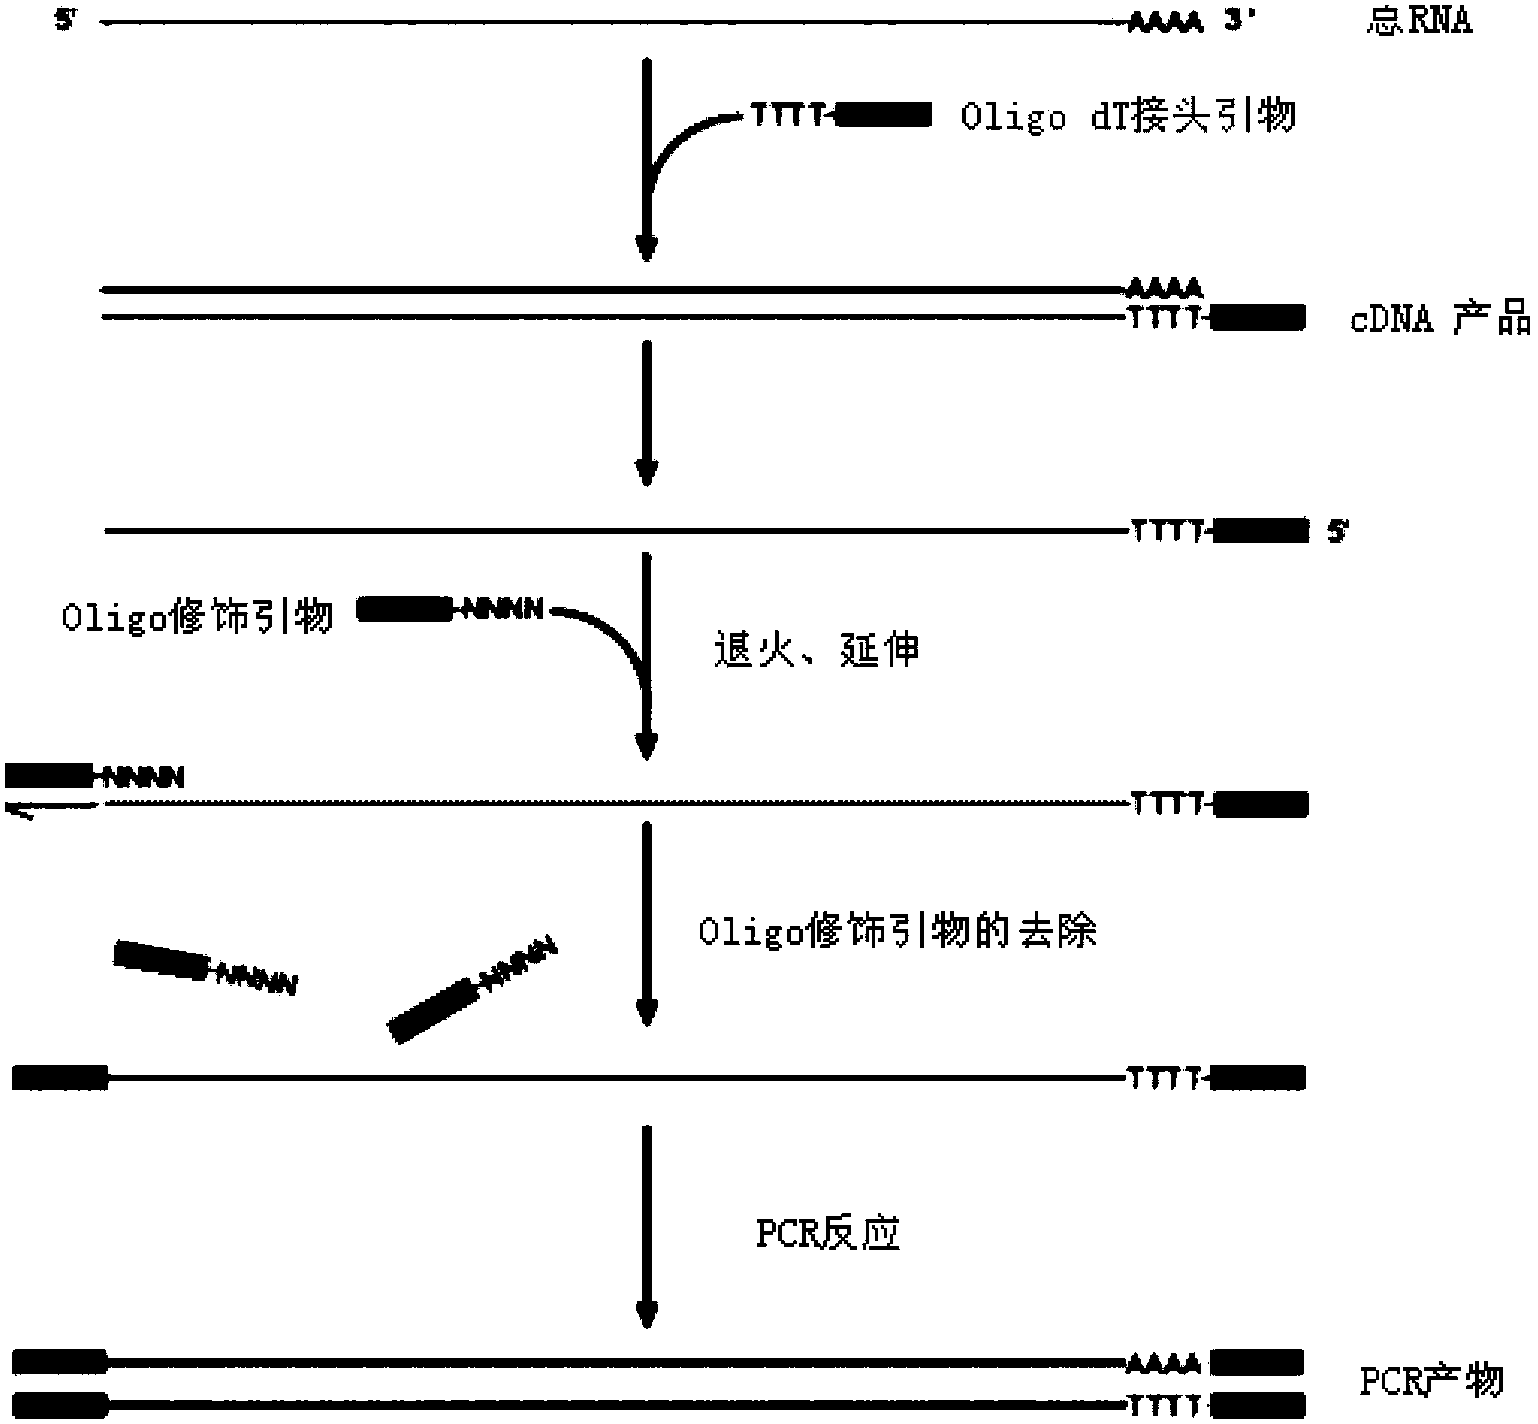 Full-length cDNA nucleic acid linear amplification method and kit